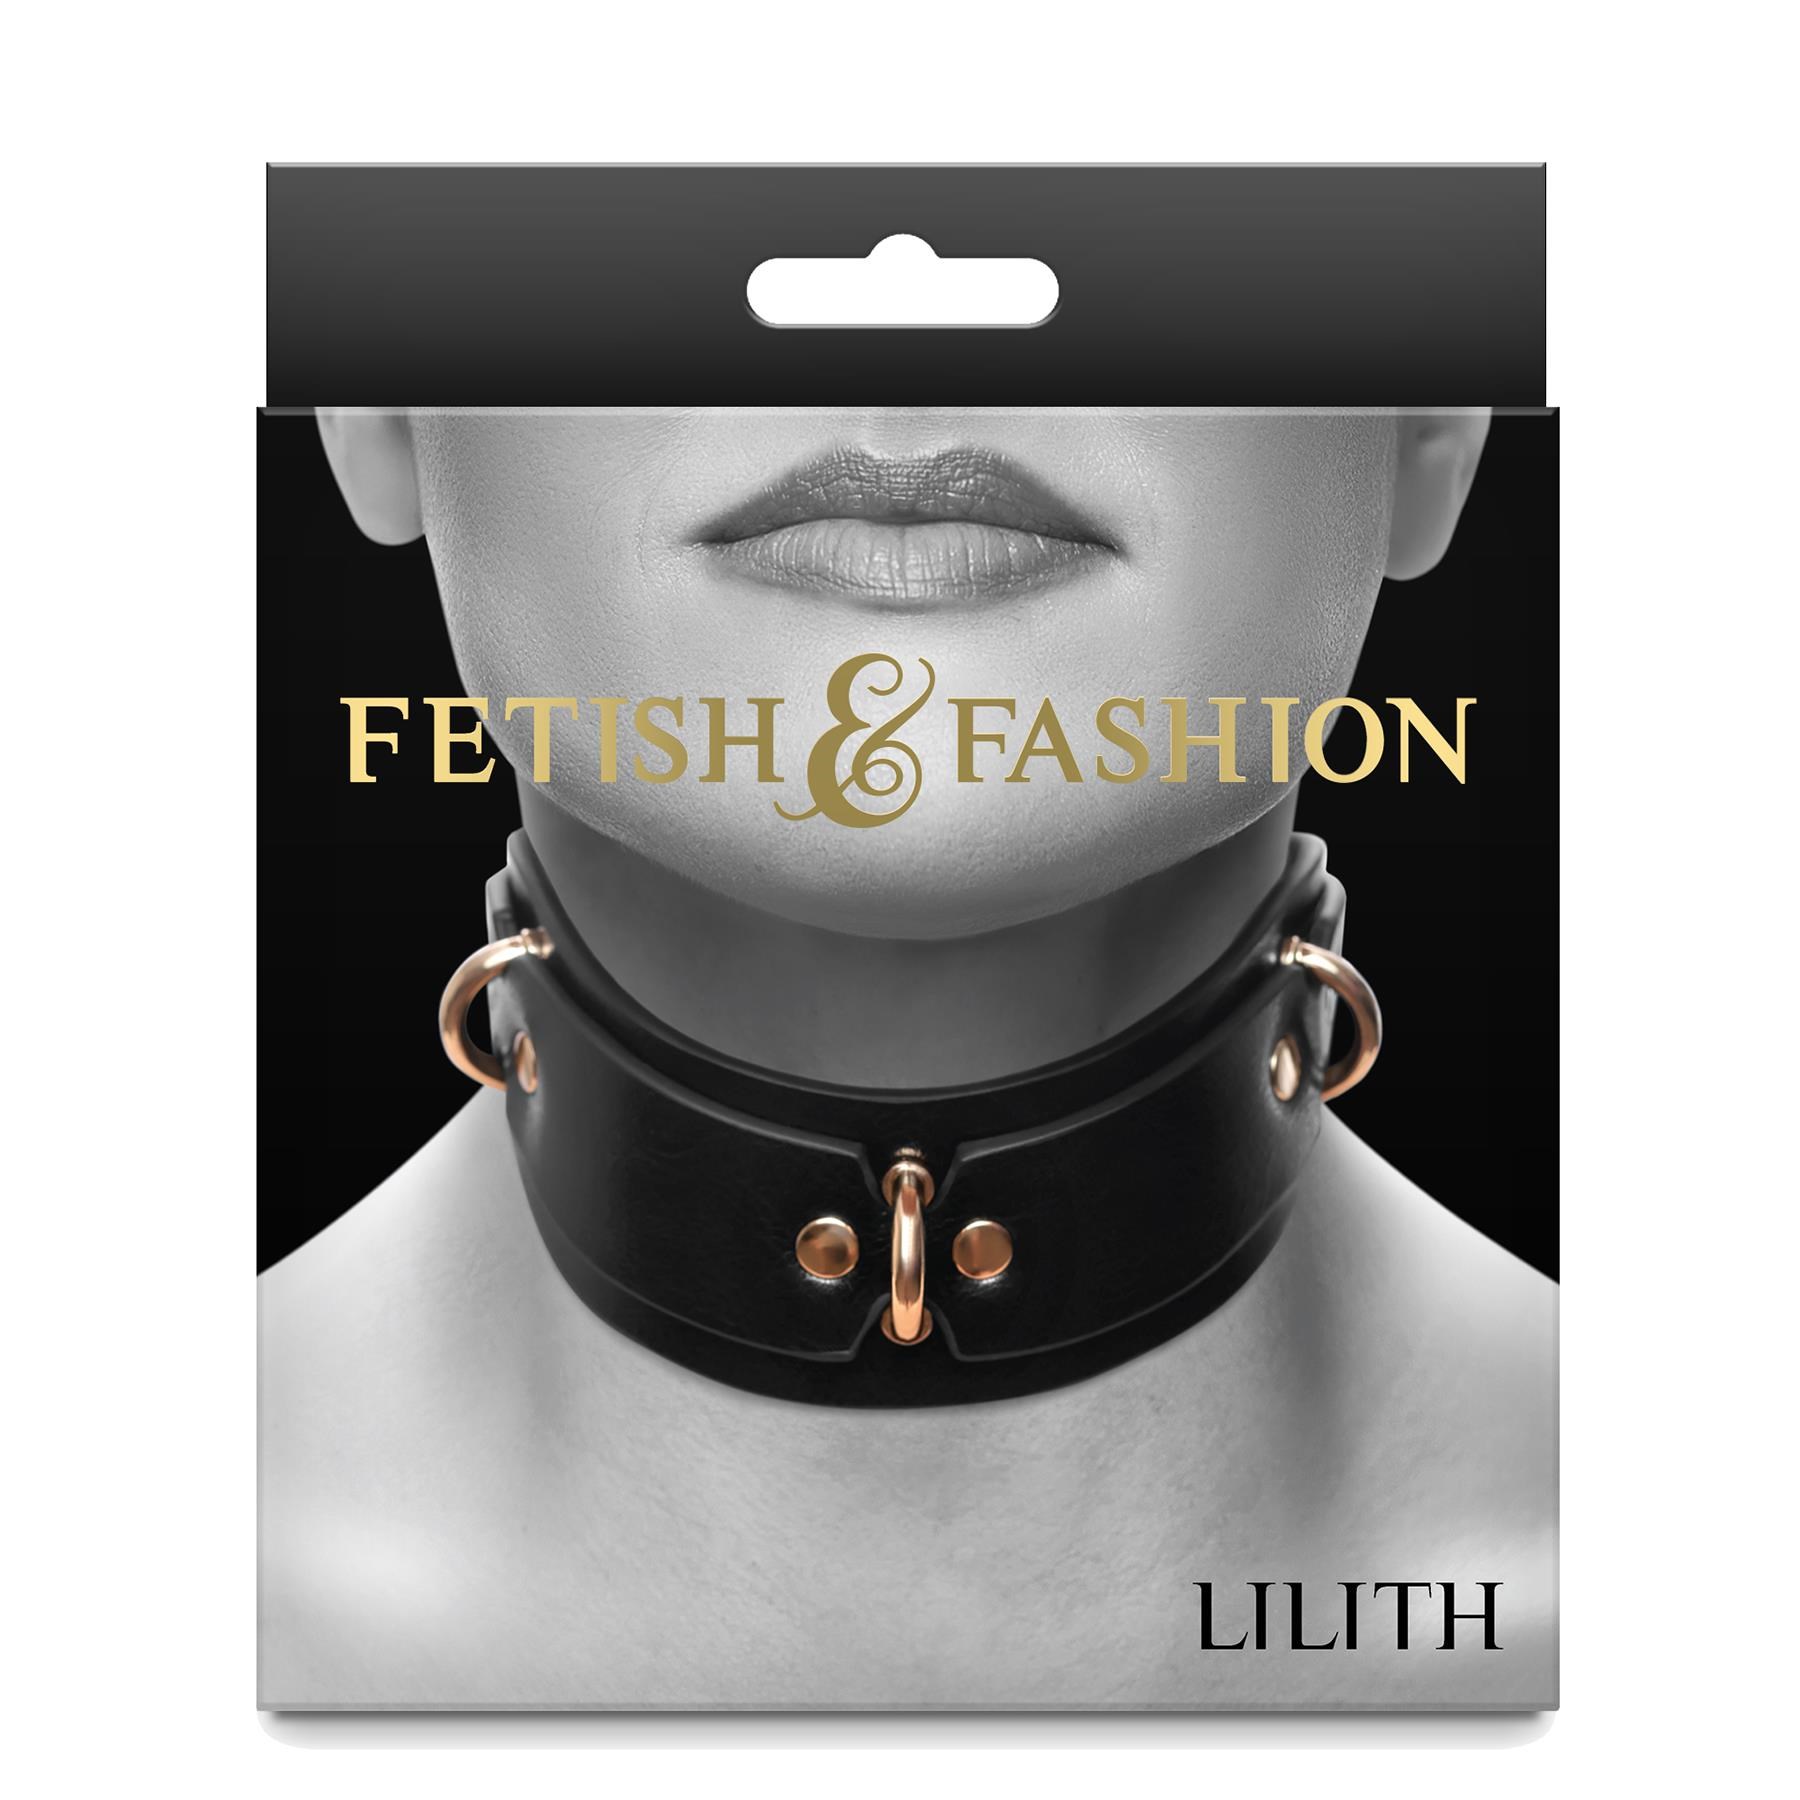 Fetish & Fashion Lilith Bondage Collar - Packaging